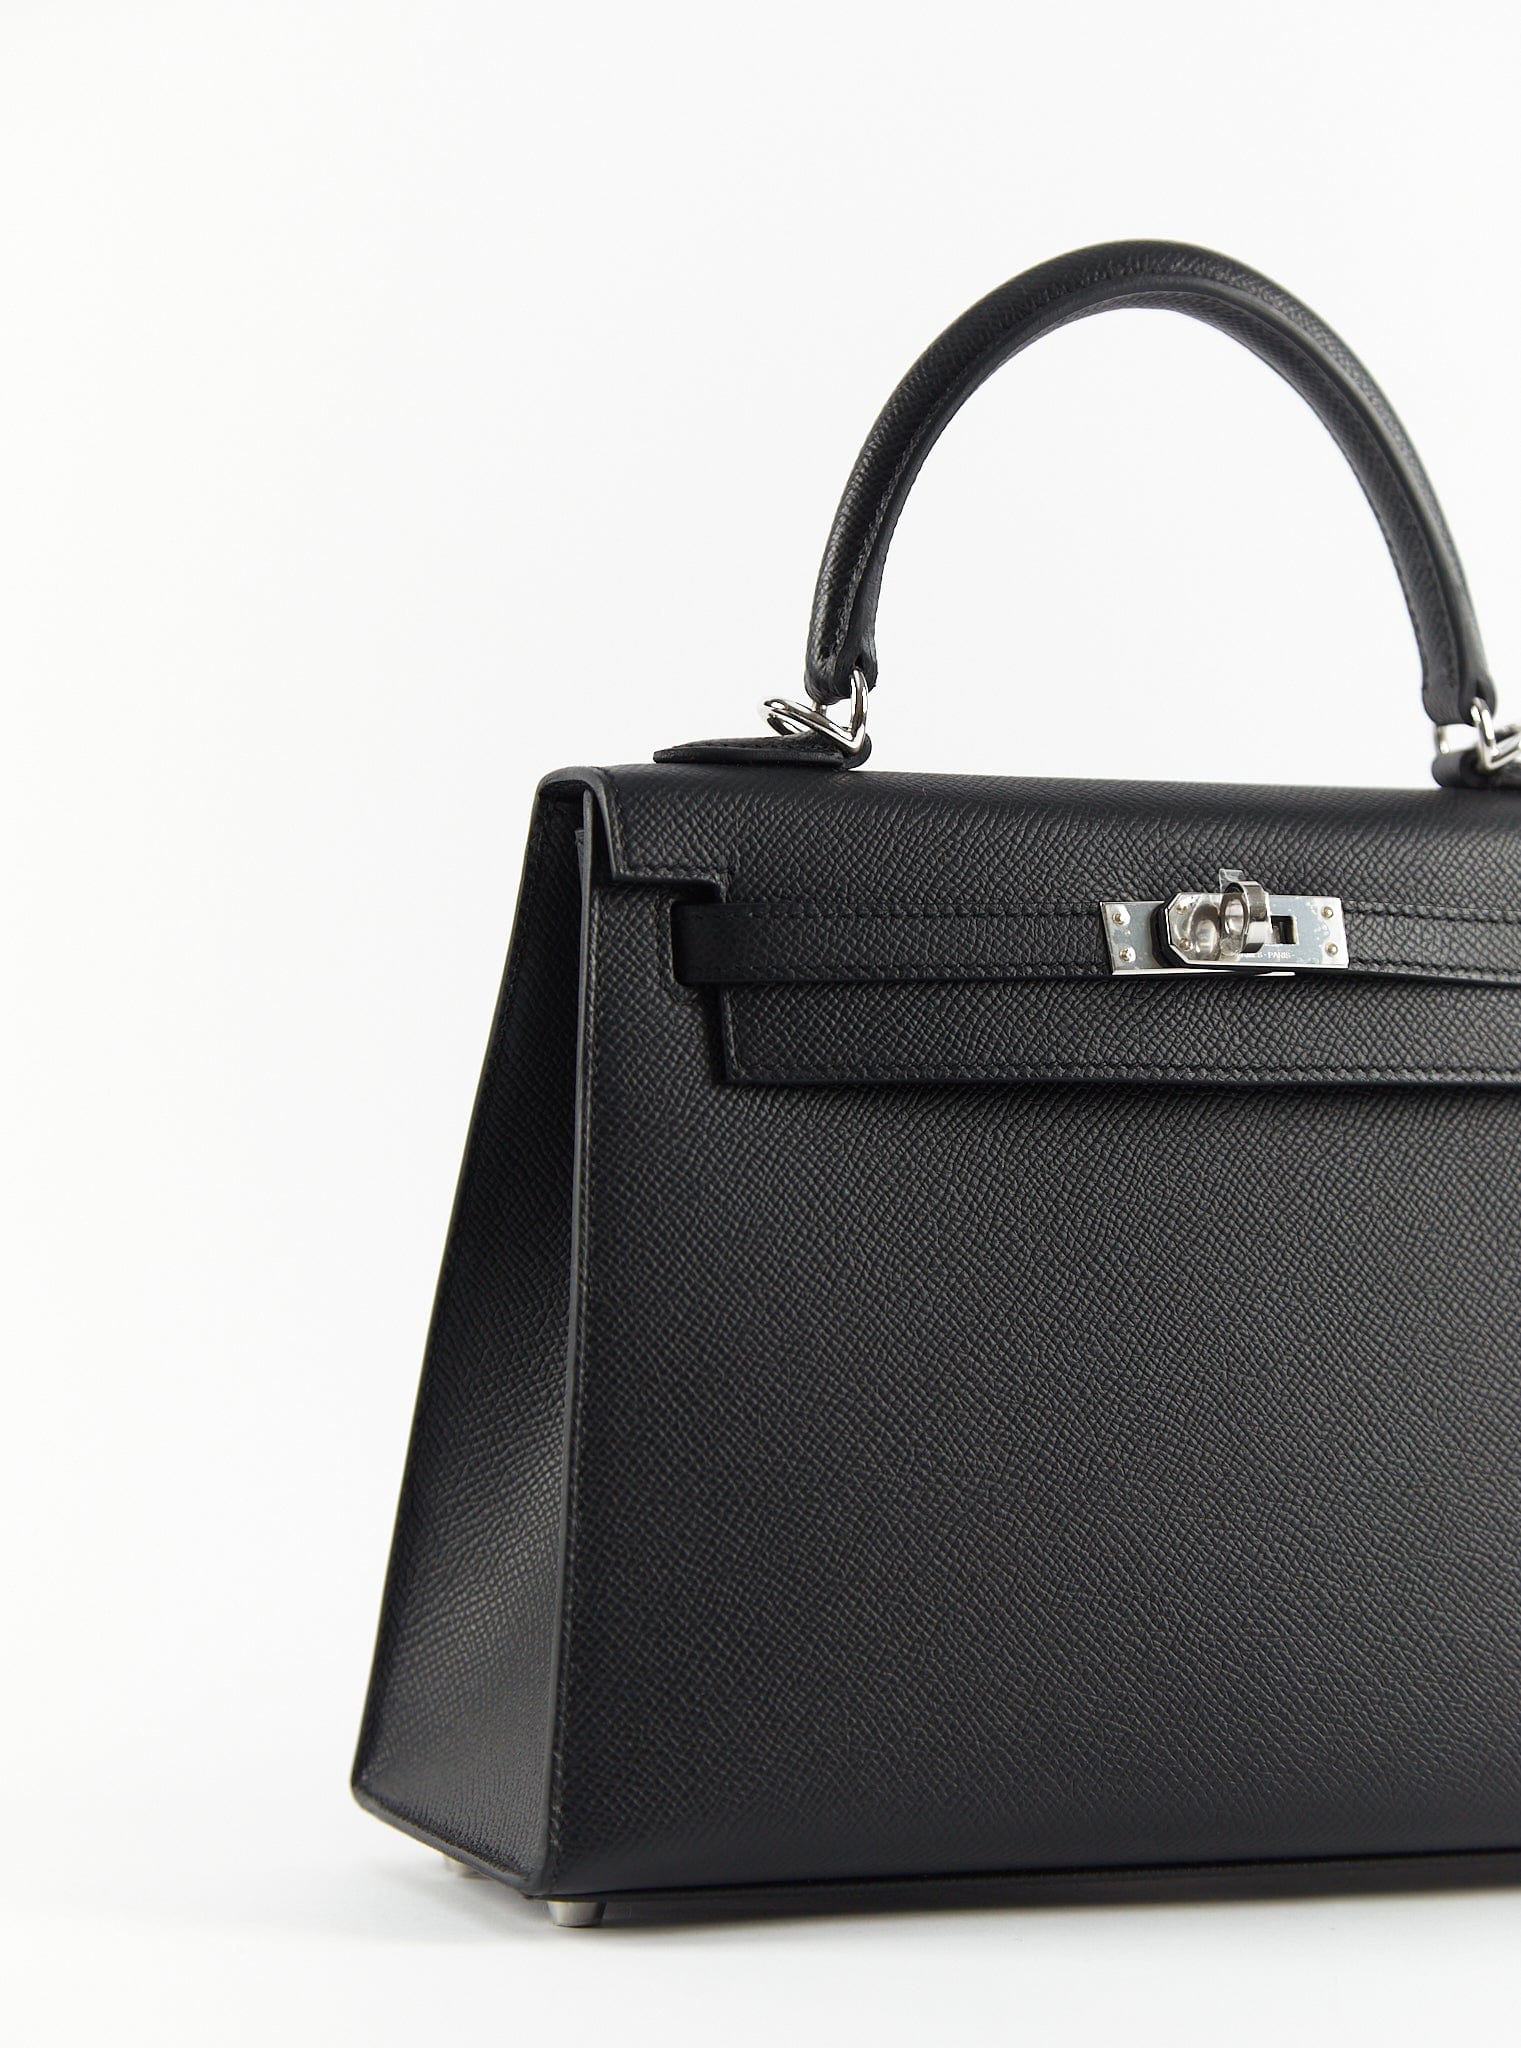 Hermès HERMÈS KELLY 25CM BLACK Epsom Leather with Palladium Hardware